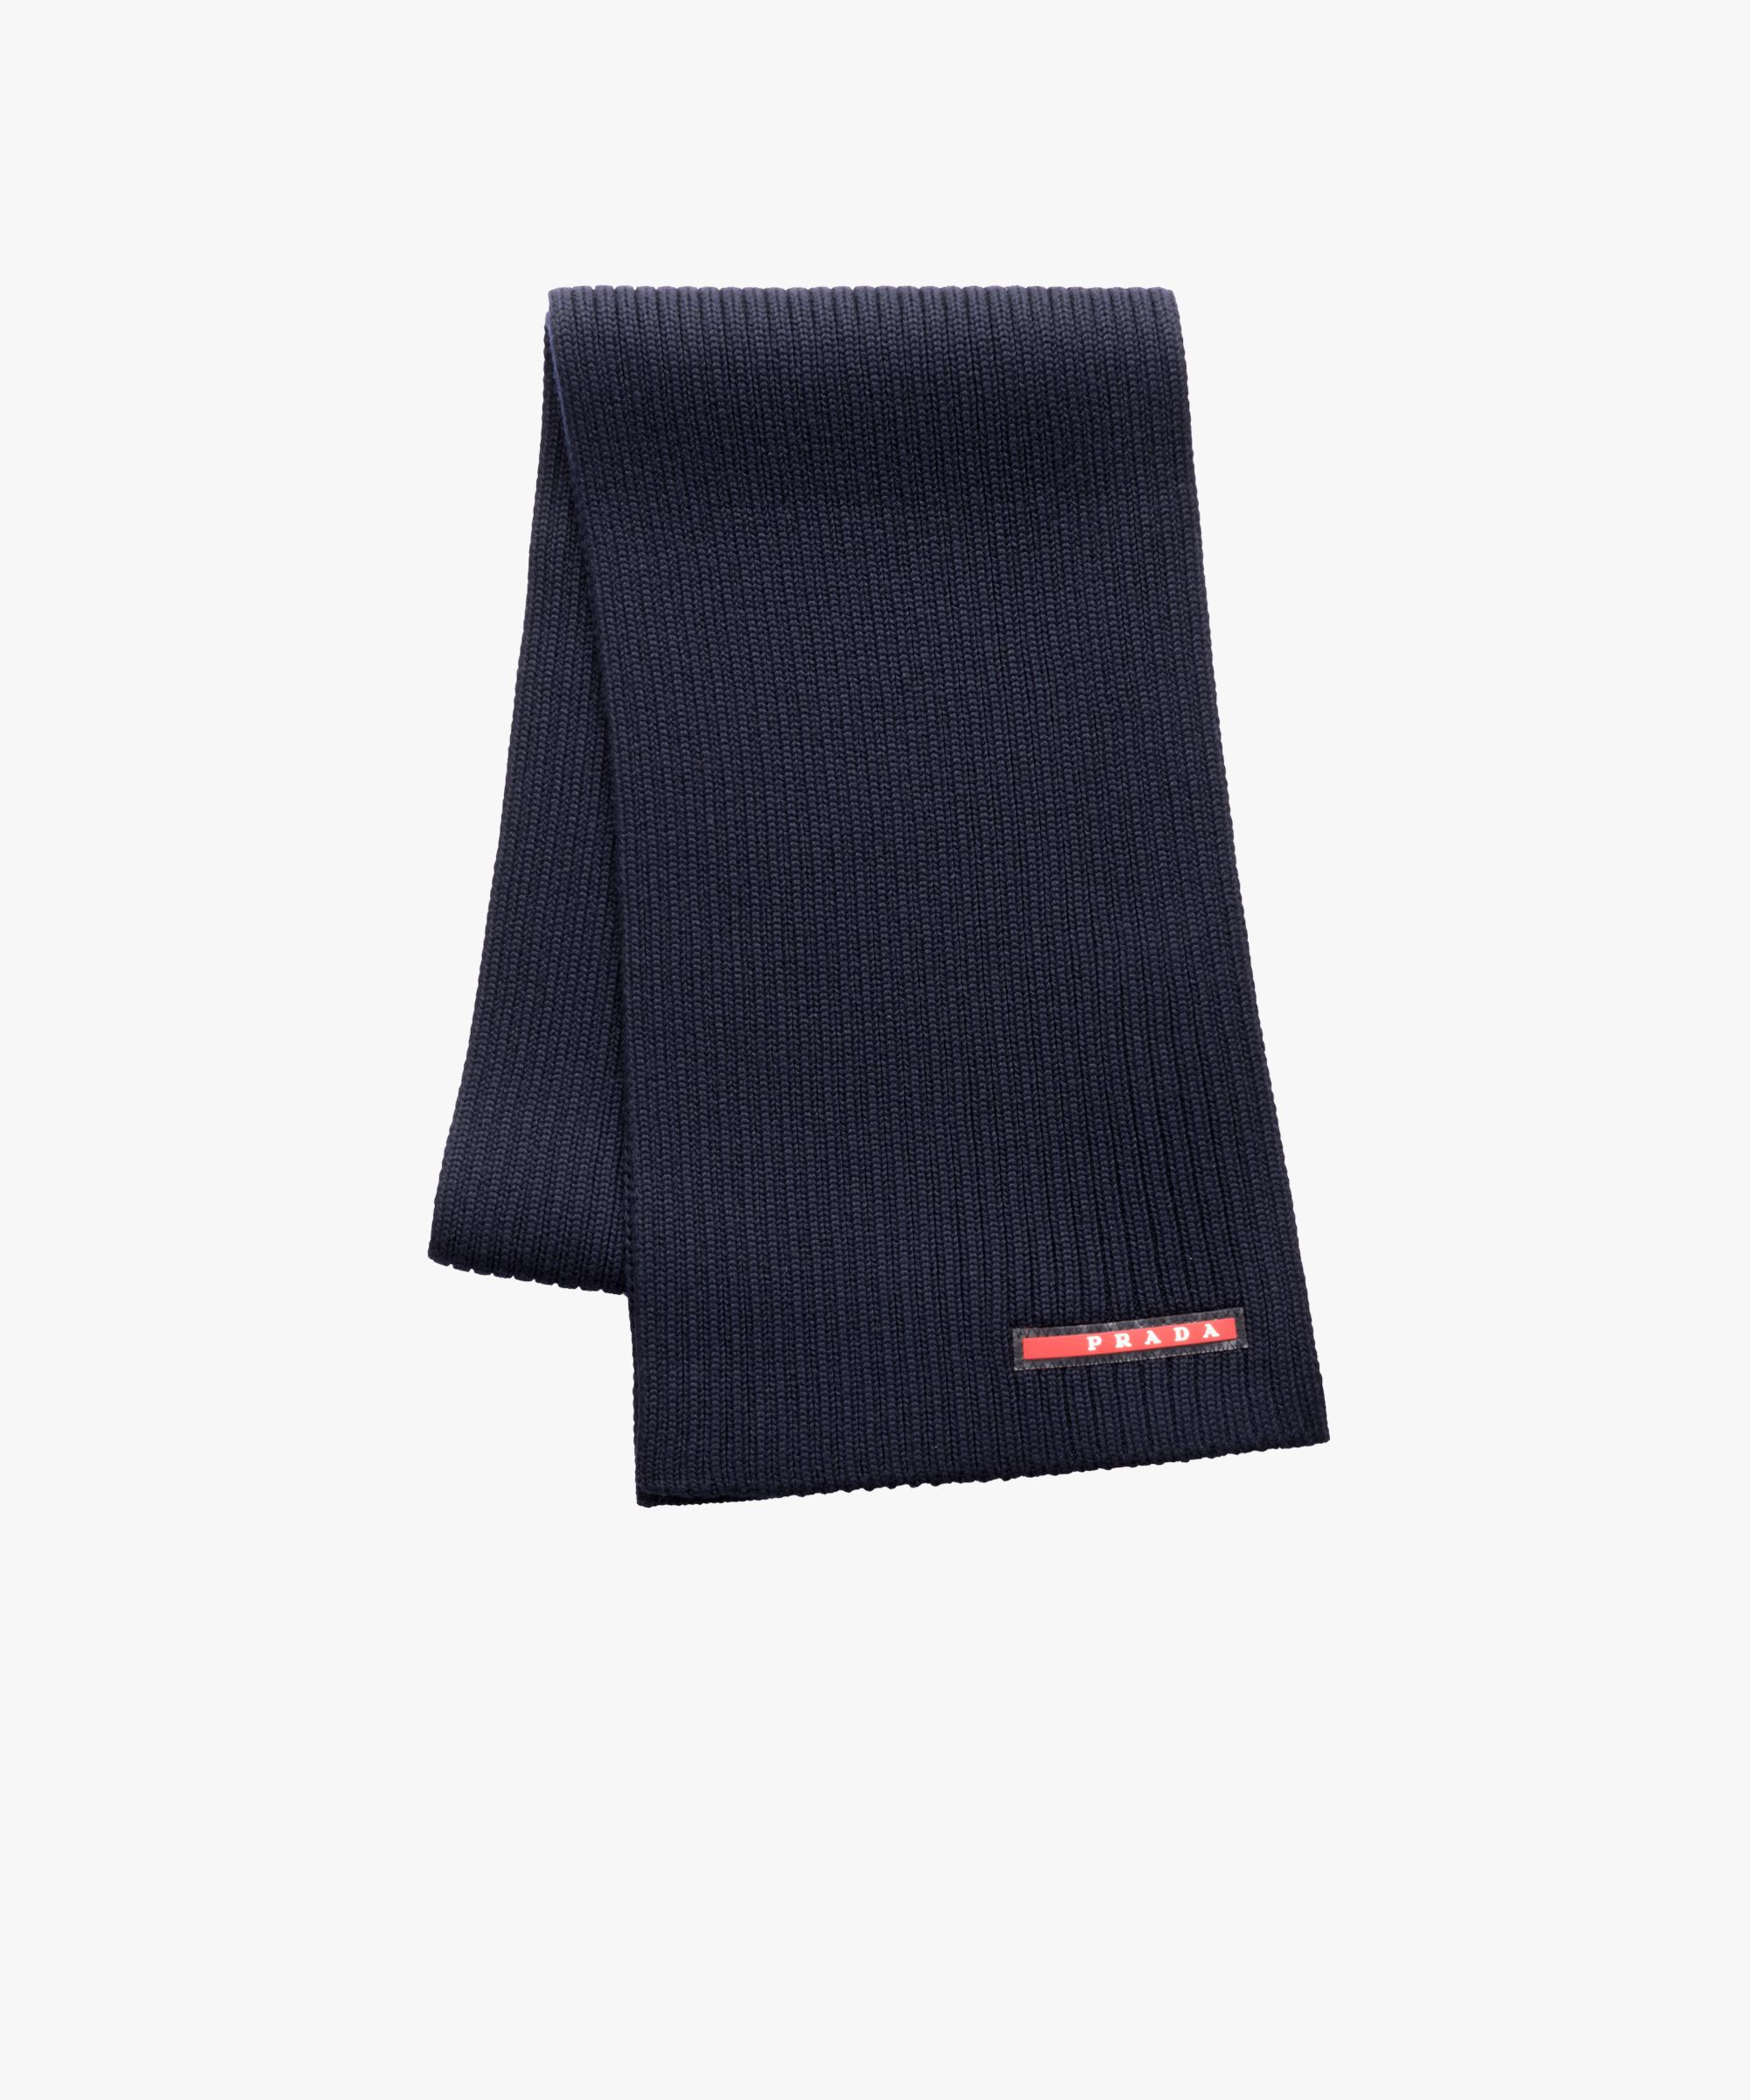 Prada Ribbed Wool Scarf in Blue for Men - Lyst